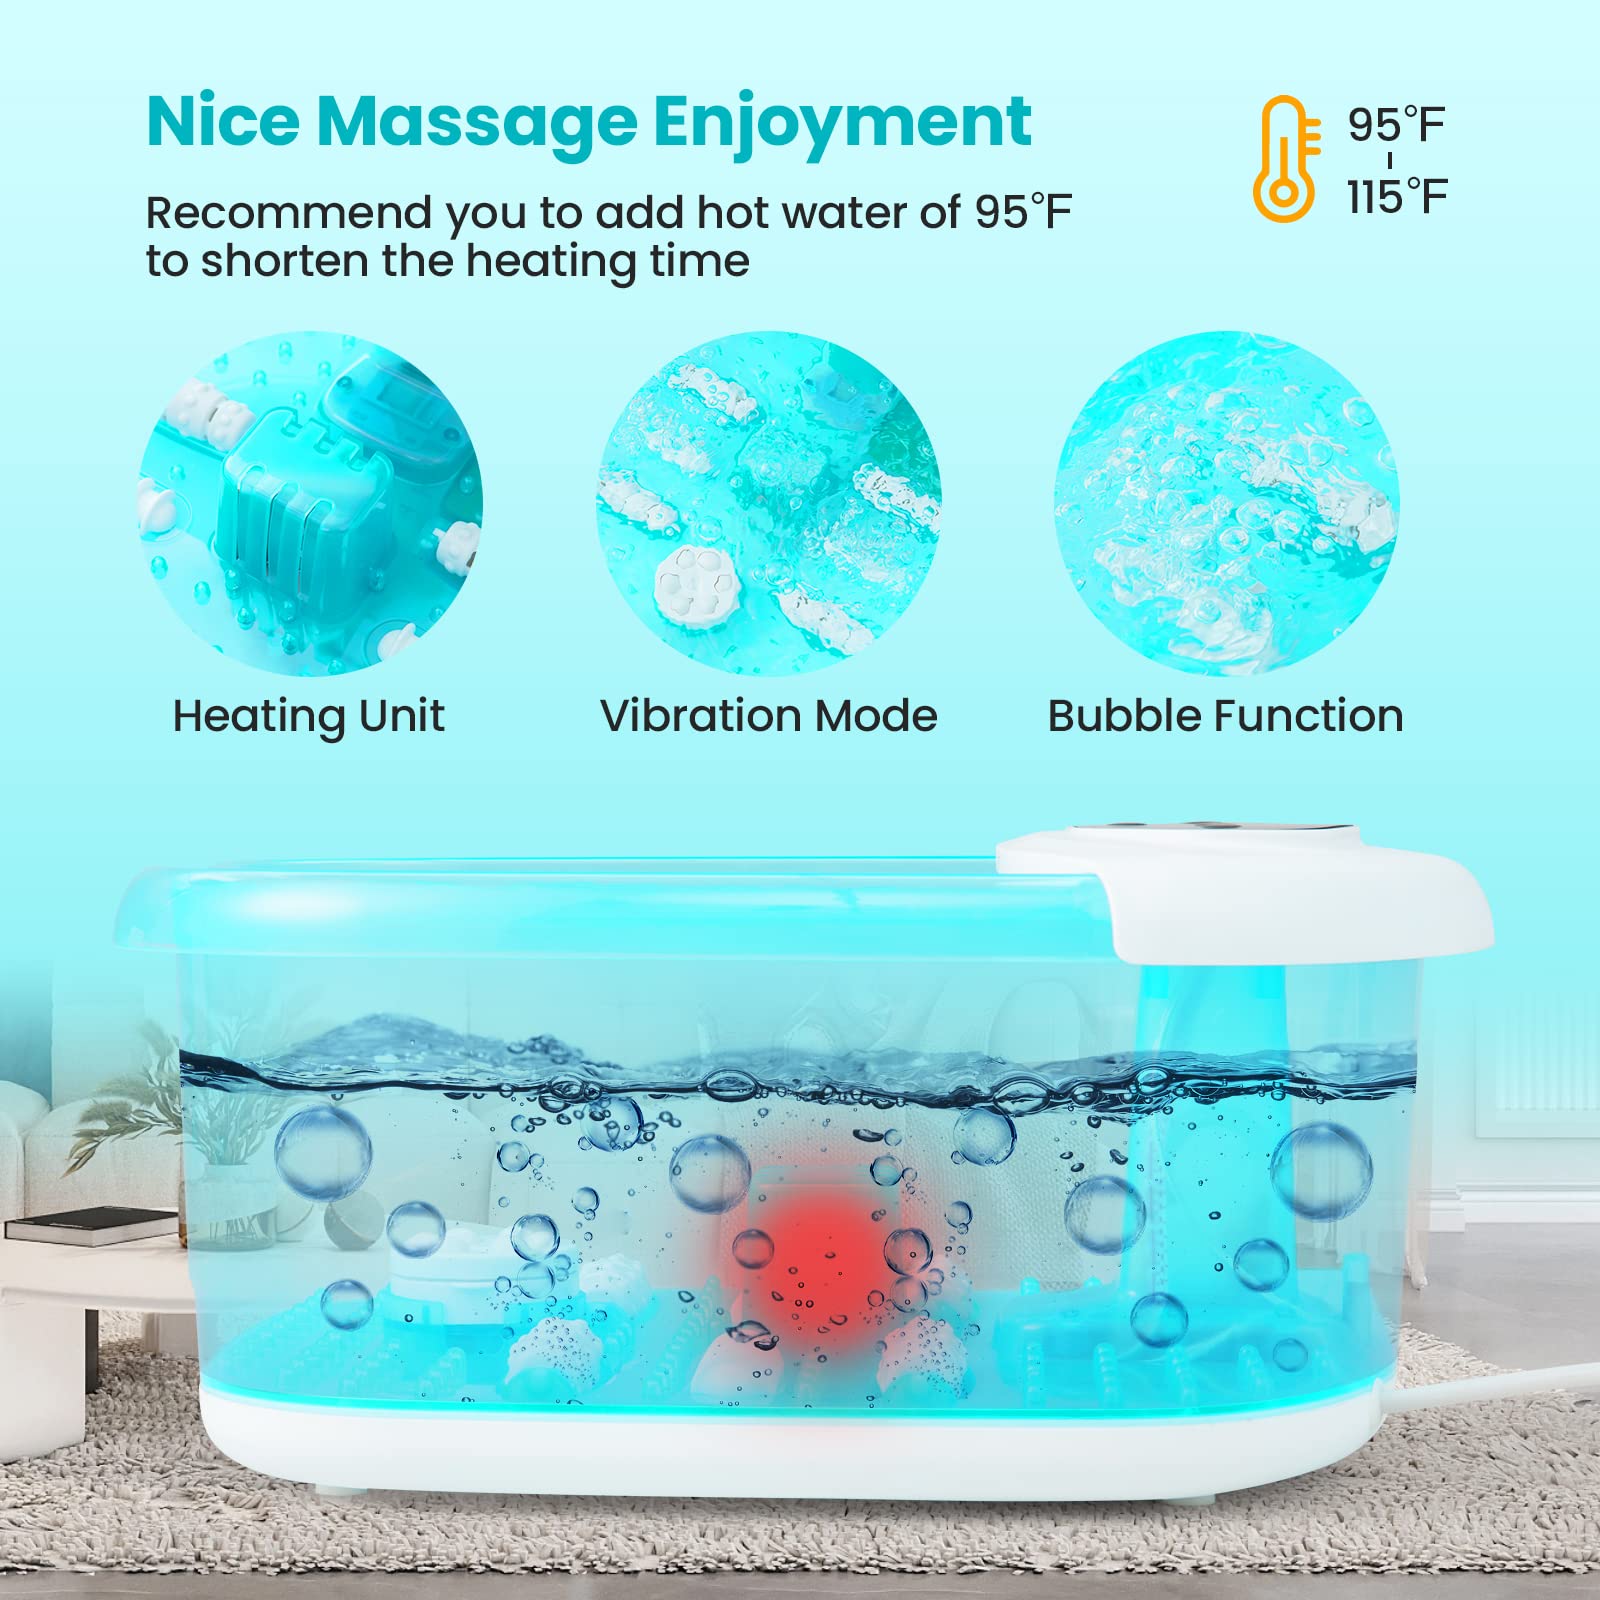 Giantex Foot Spa with Heat and Massage - Feet Bath Soak Tub w/Bubble, Vibration, Removable Pedicure Stone